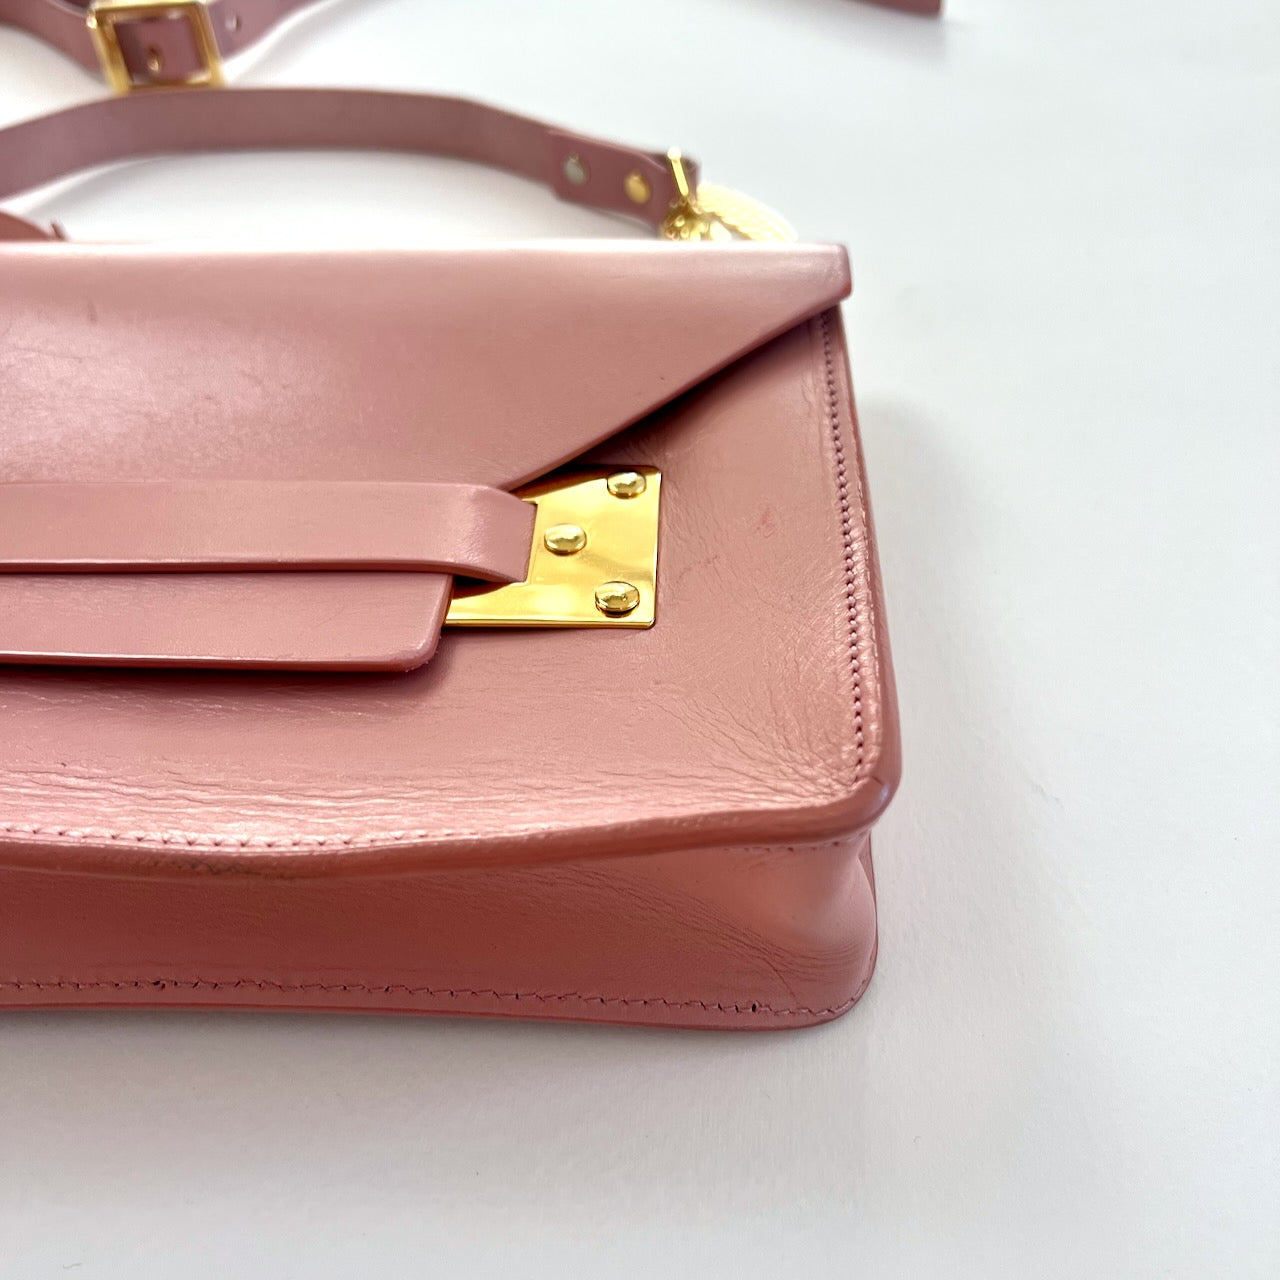 Sophie Hulme 'Milner mini' pink leather cross body bag